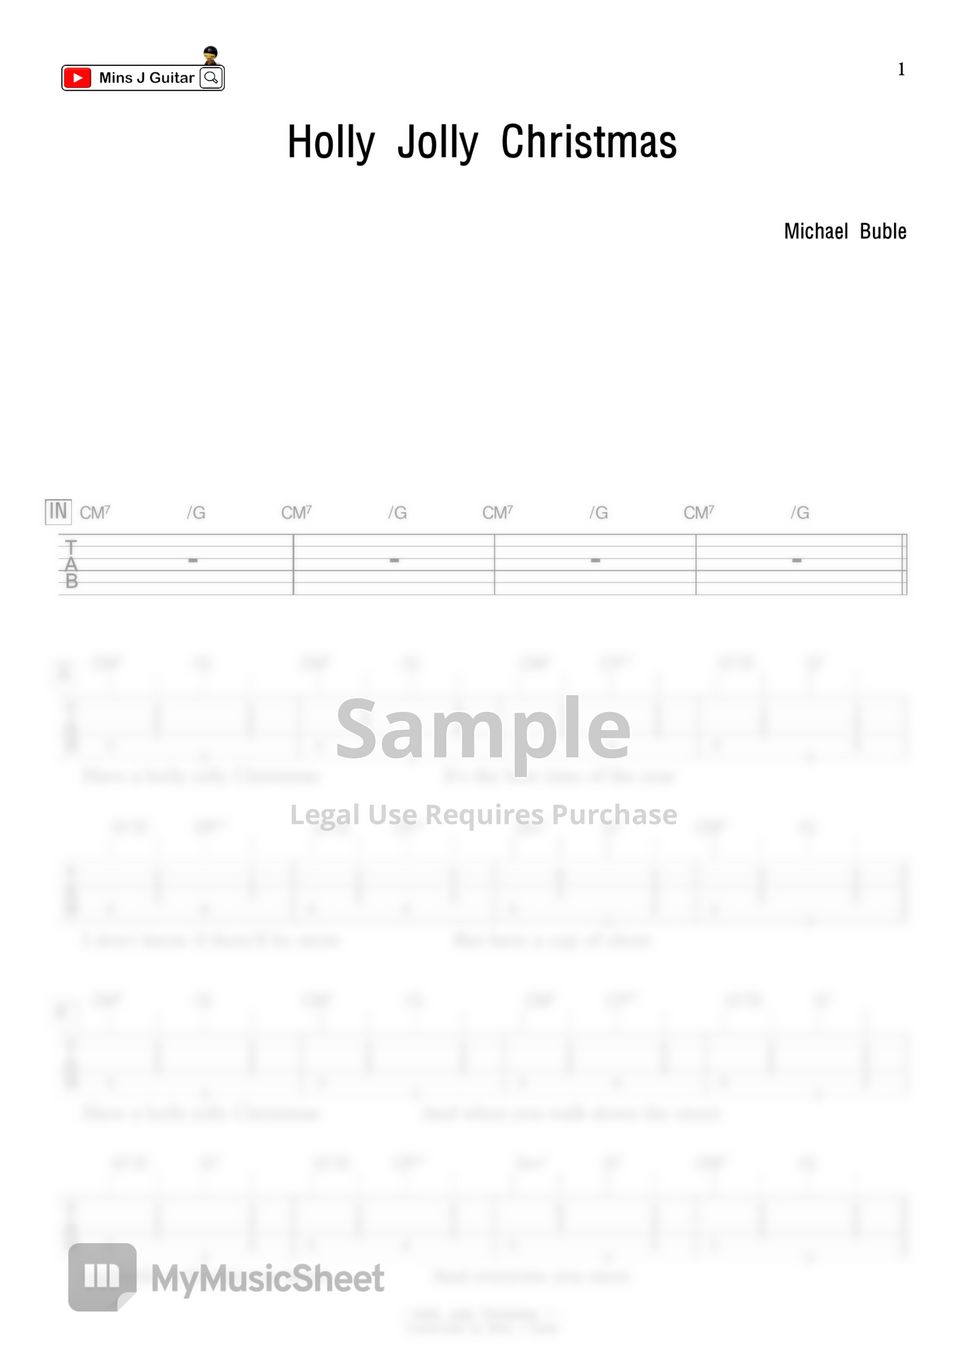 Michael Buble - Holly Jolly Christmas (TAB&Chord) by mins J Guitar